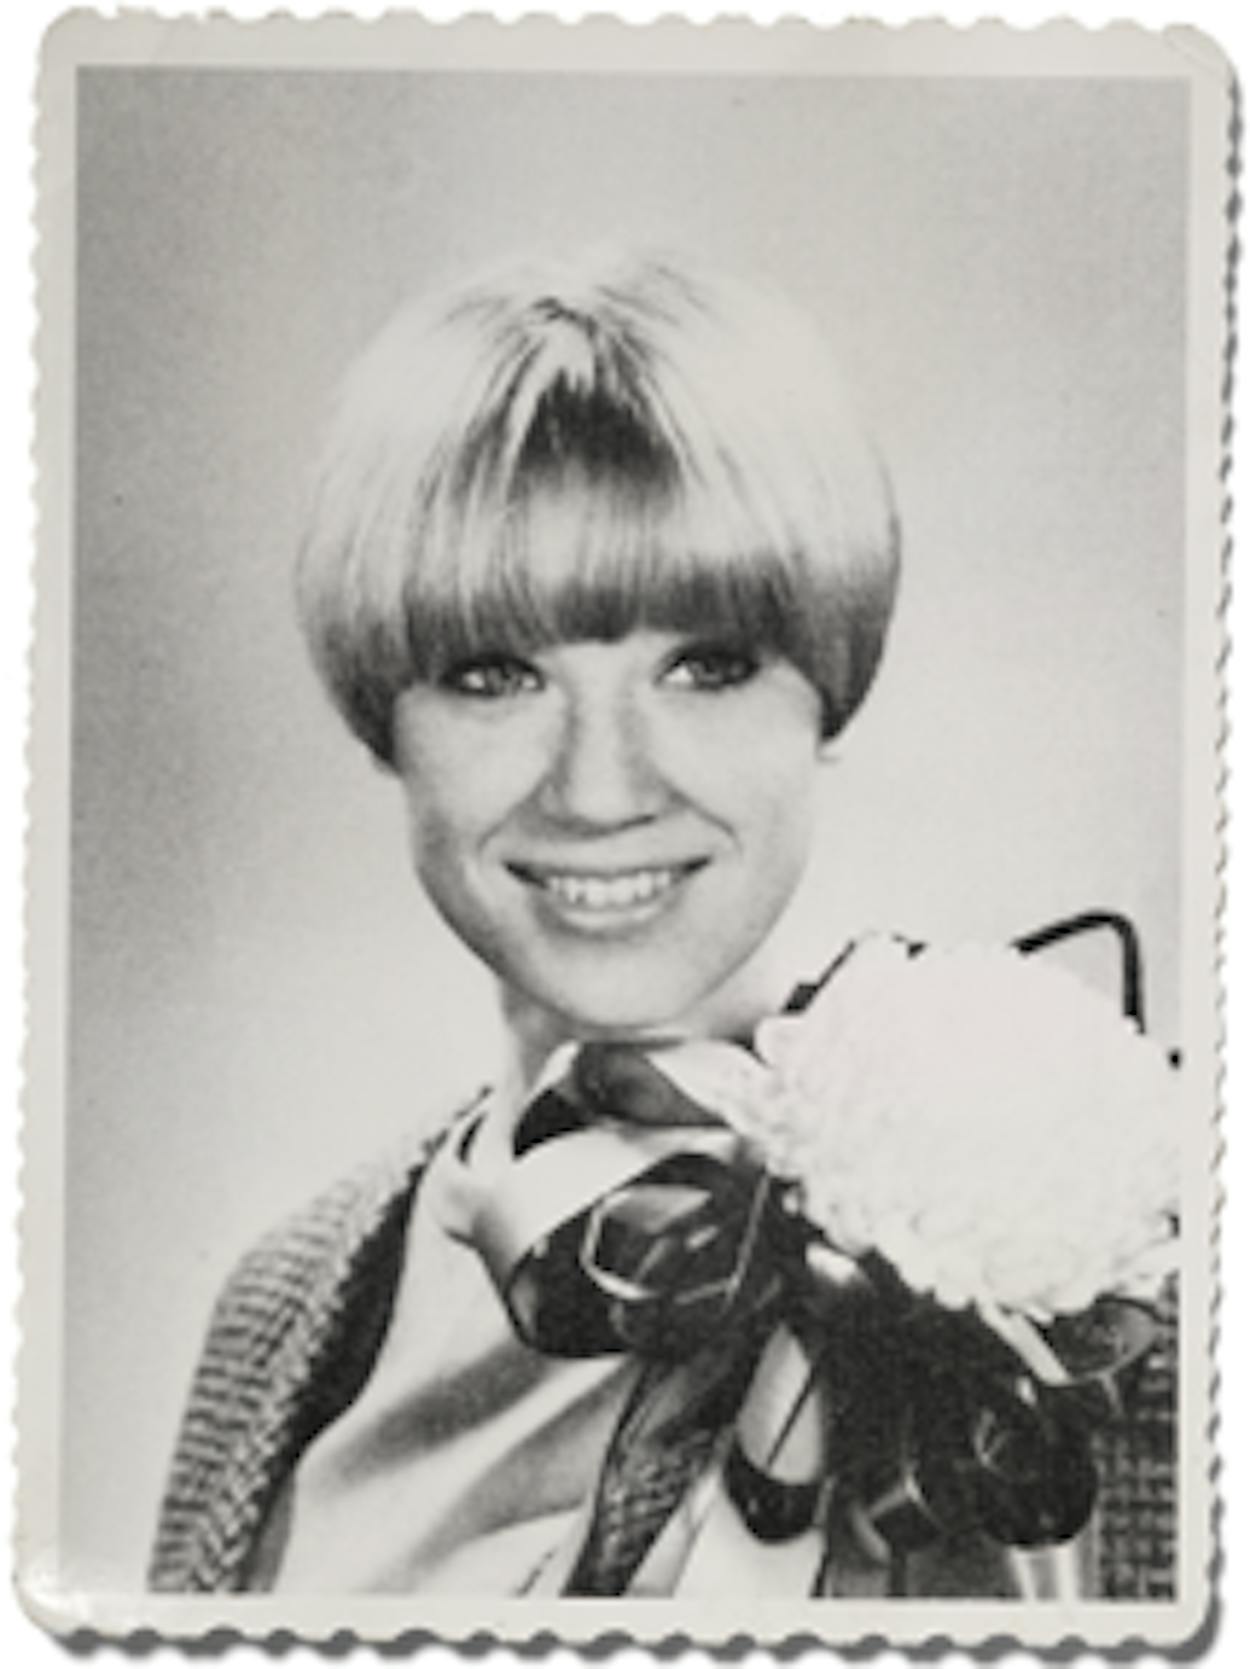 Old black and white headshot of Sissy Spacek in high school.